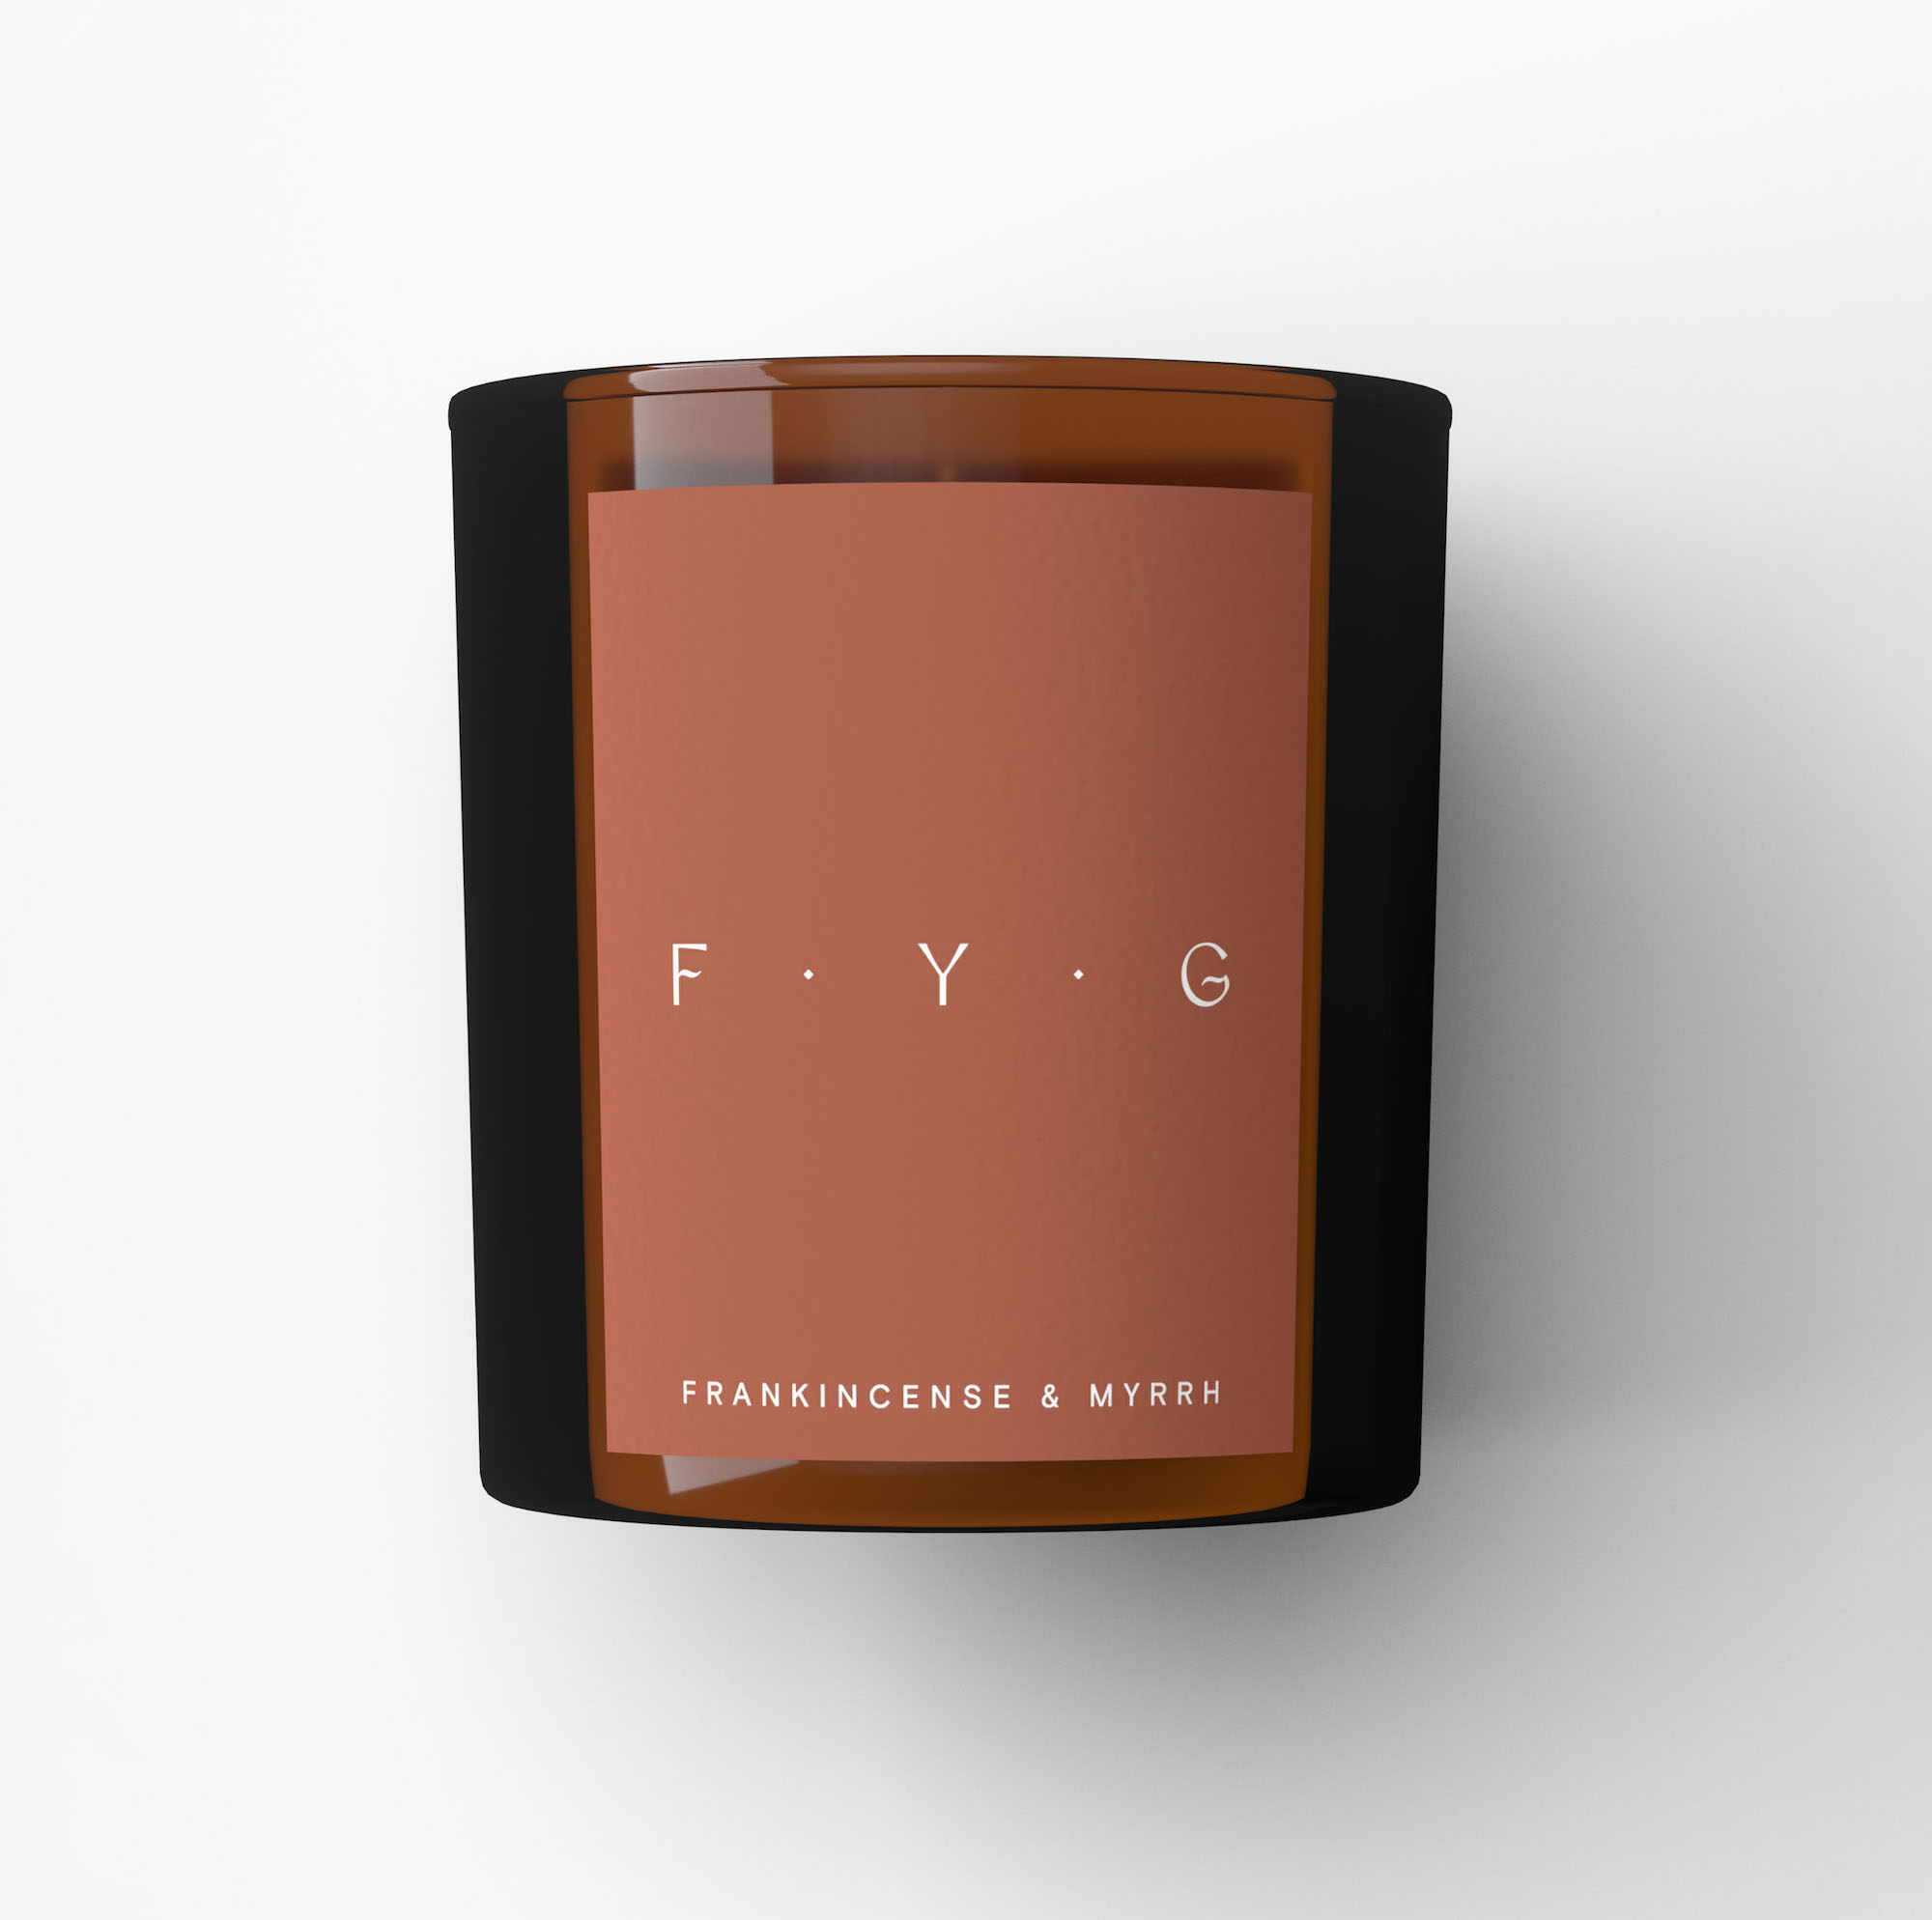 FYG Frankincense & Myrrh Candle